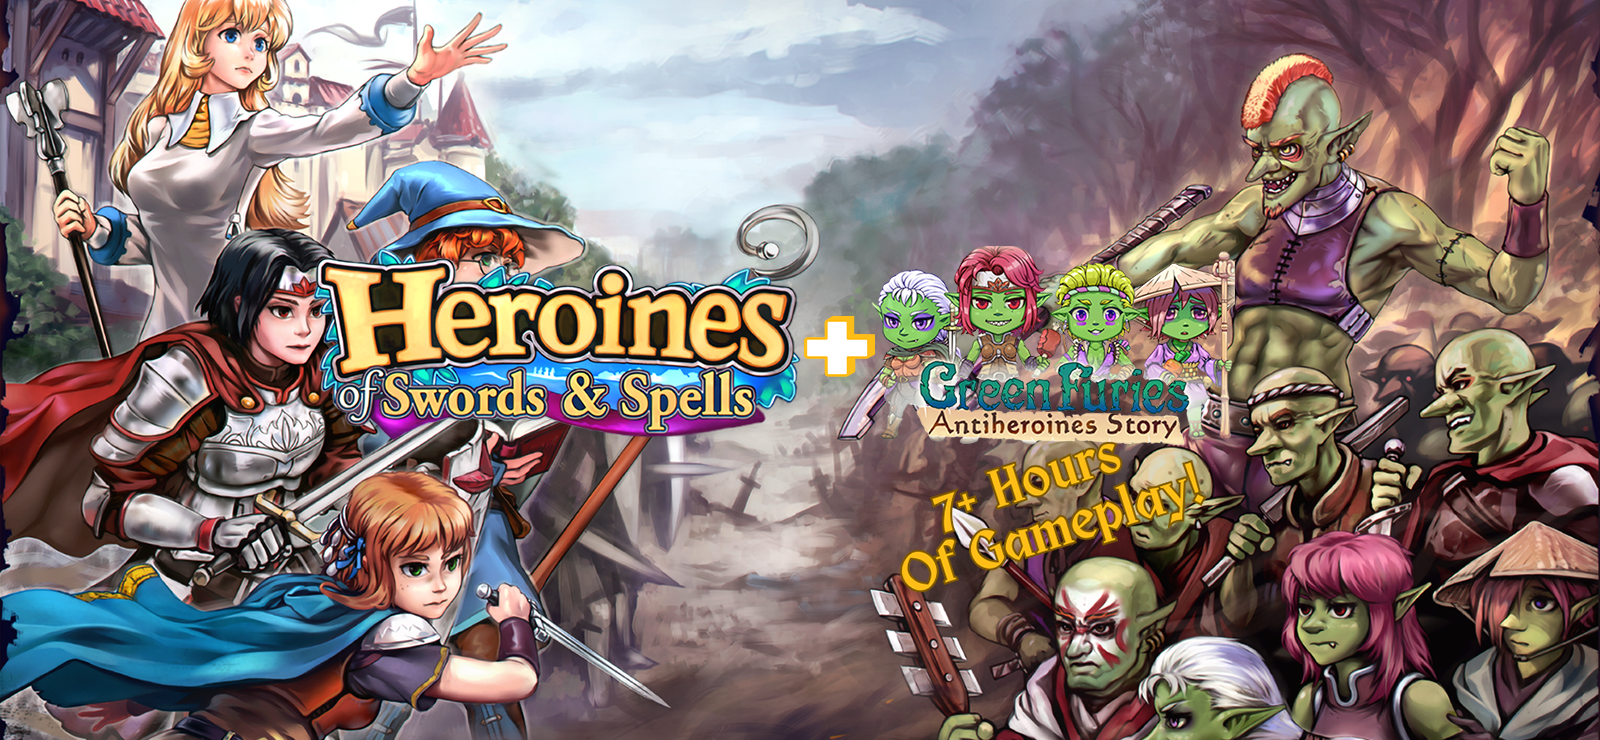 Heroines Of Swords & Spells + Green Furies DLC